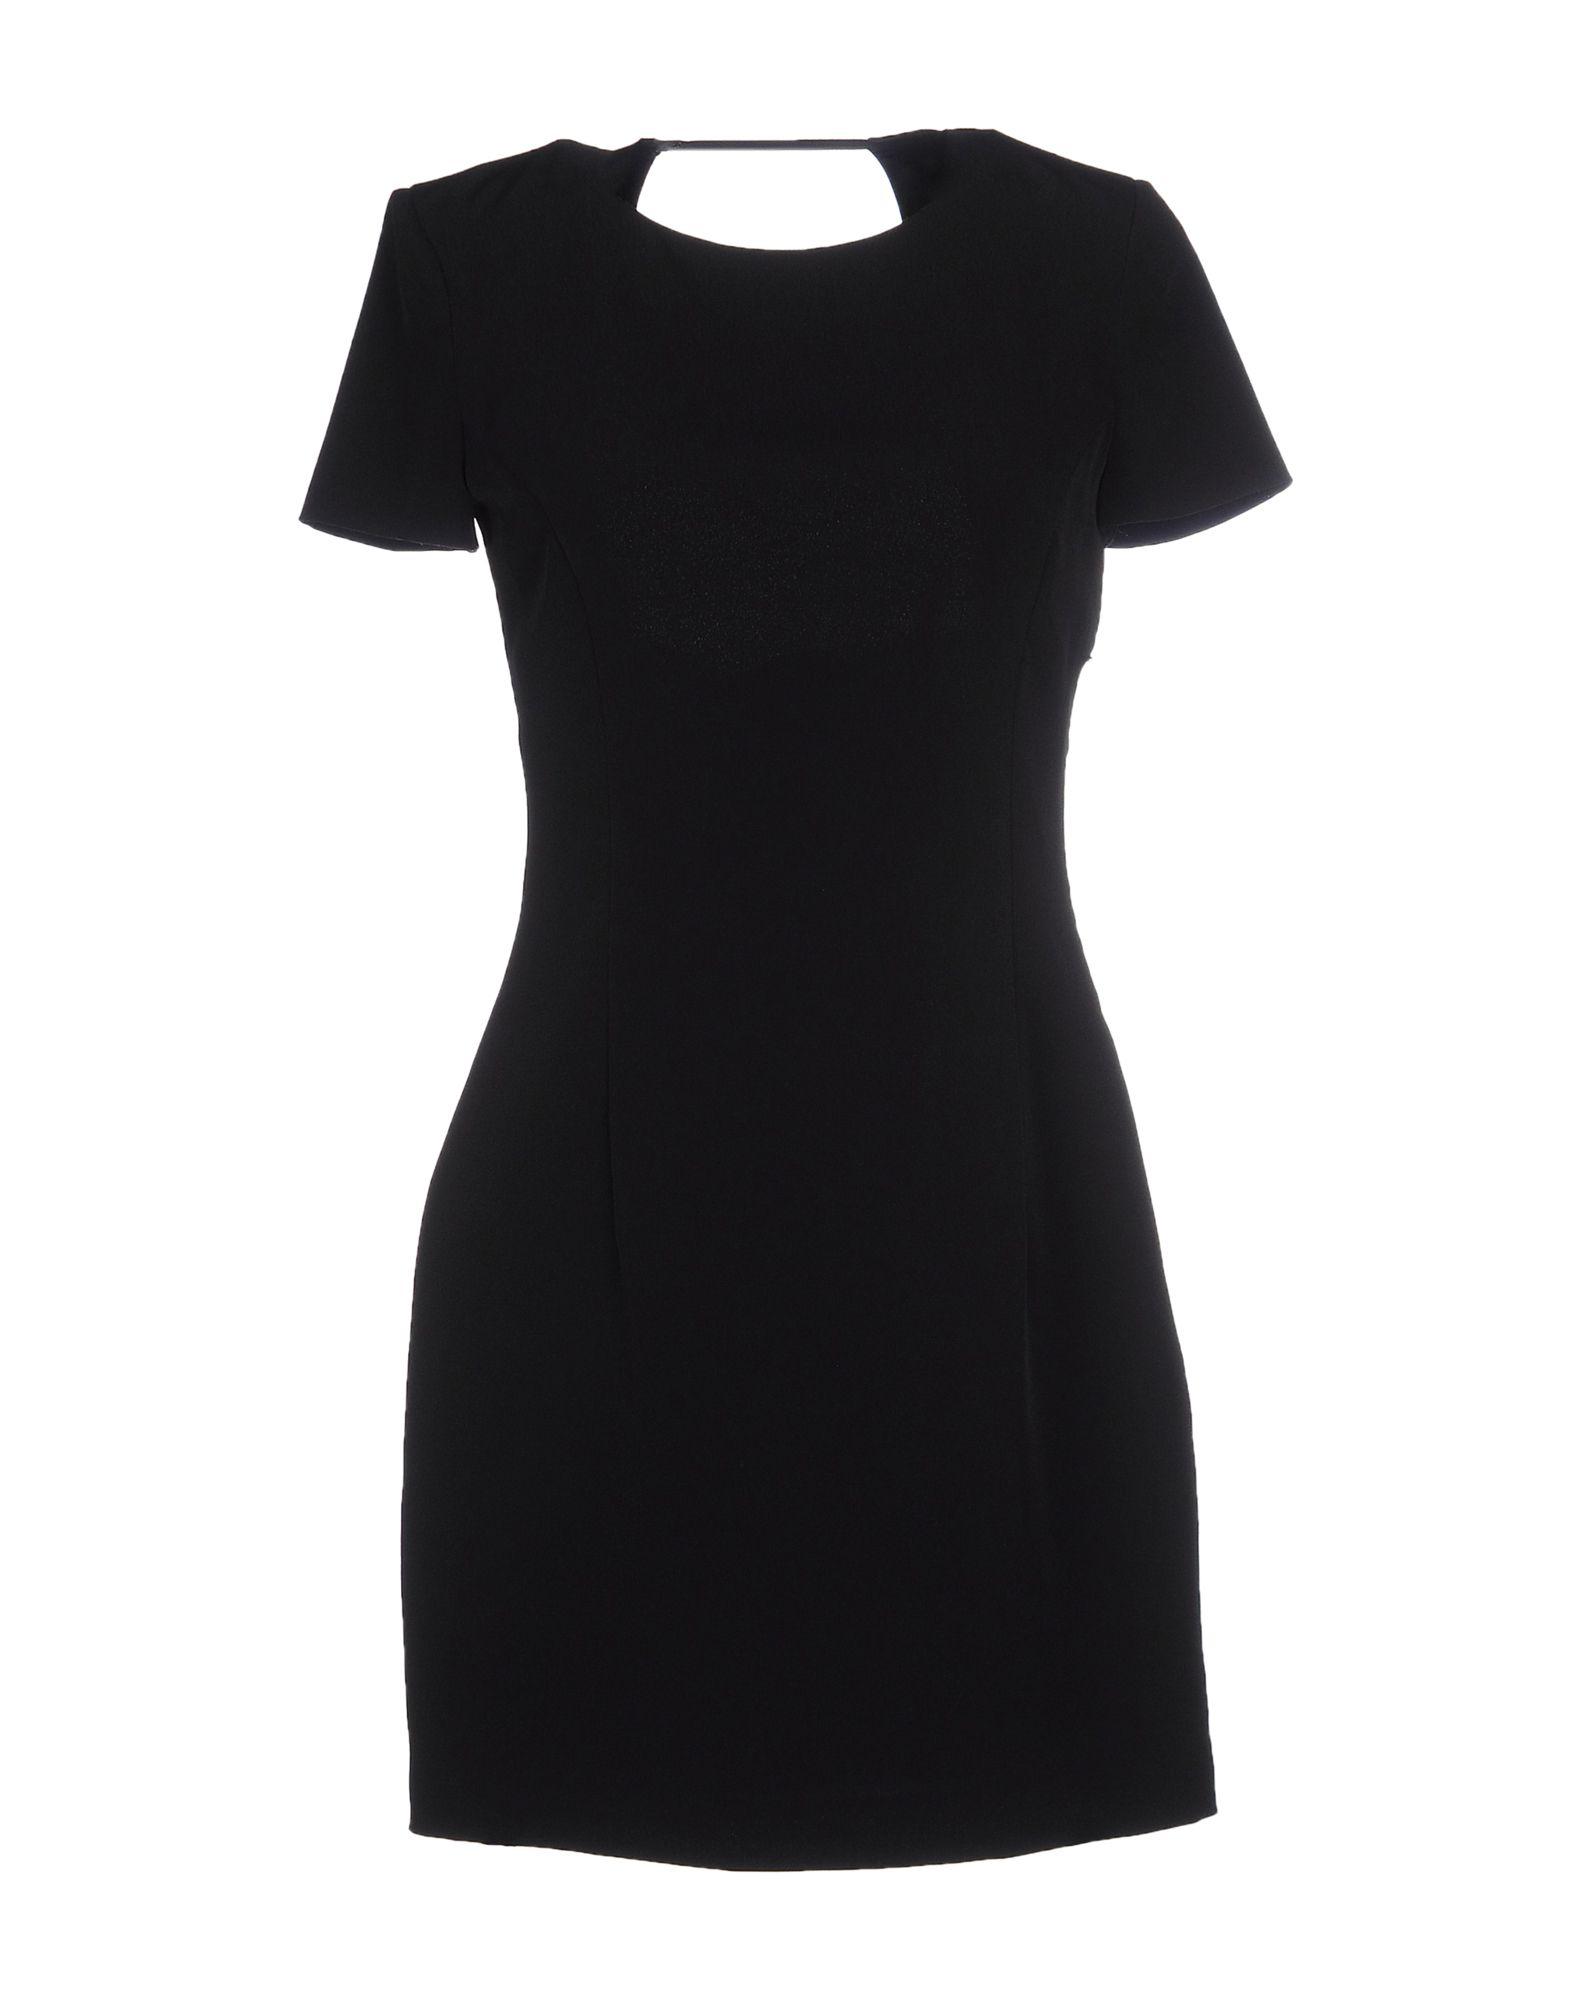 Frankie Morello Short Dress in Black - Lyst